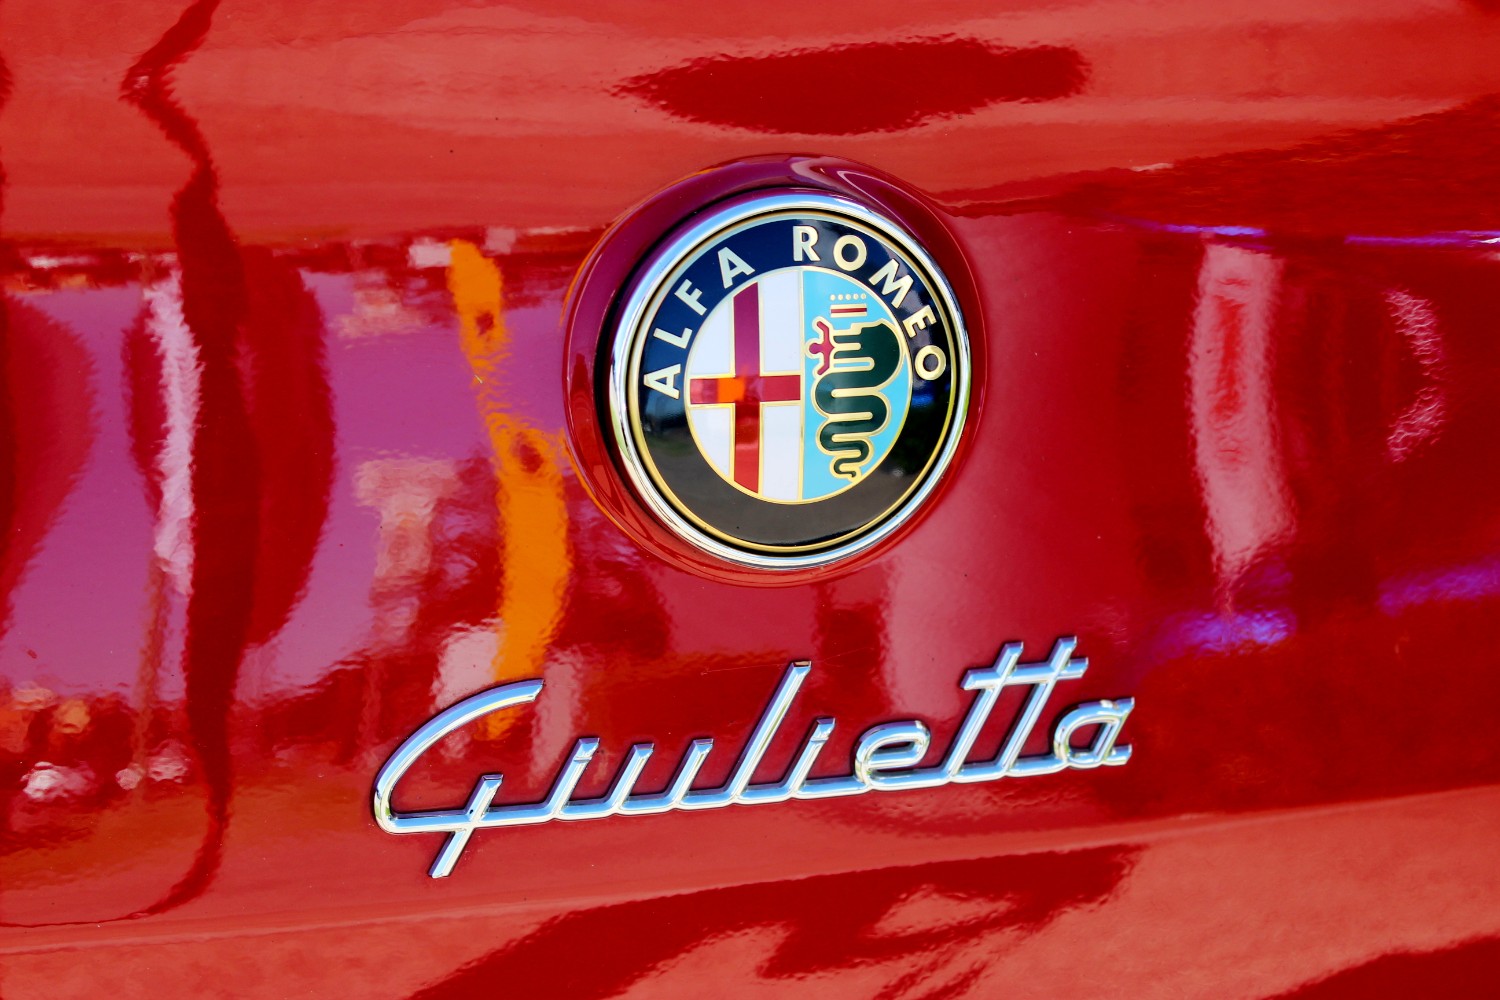 2014 Alfa Romeo Giulietta Series 1 Distinctive Hatch Image 7